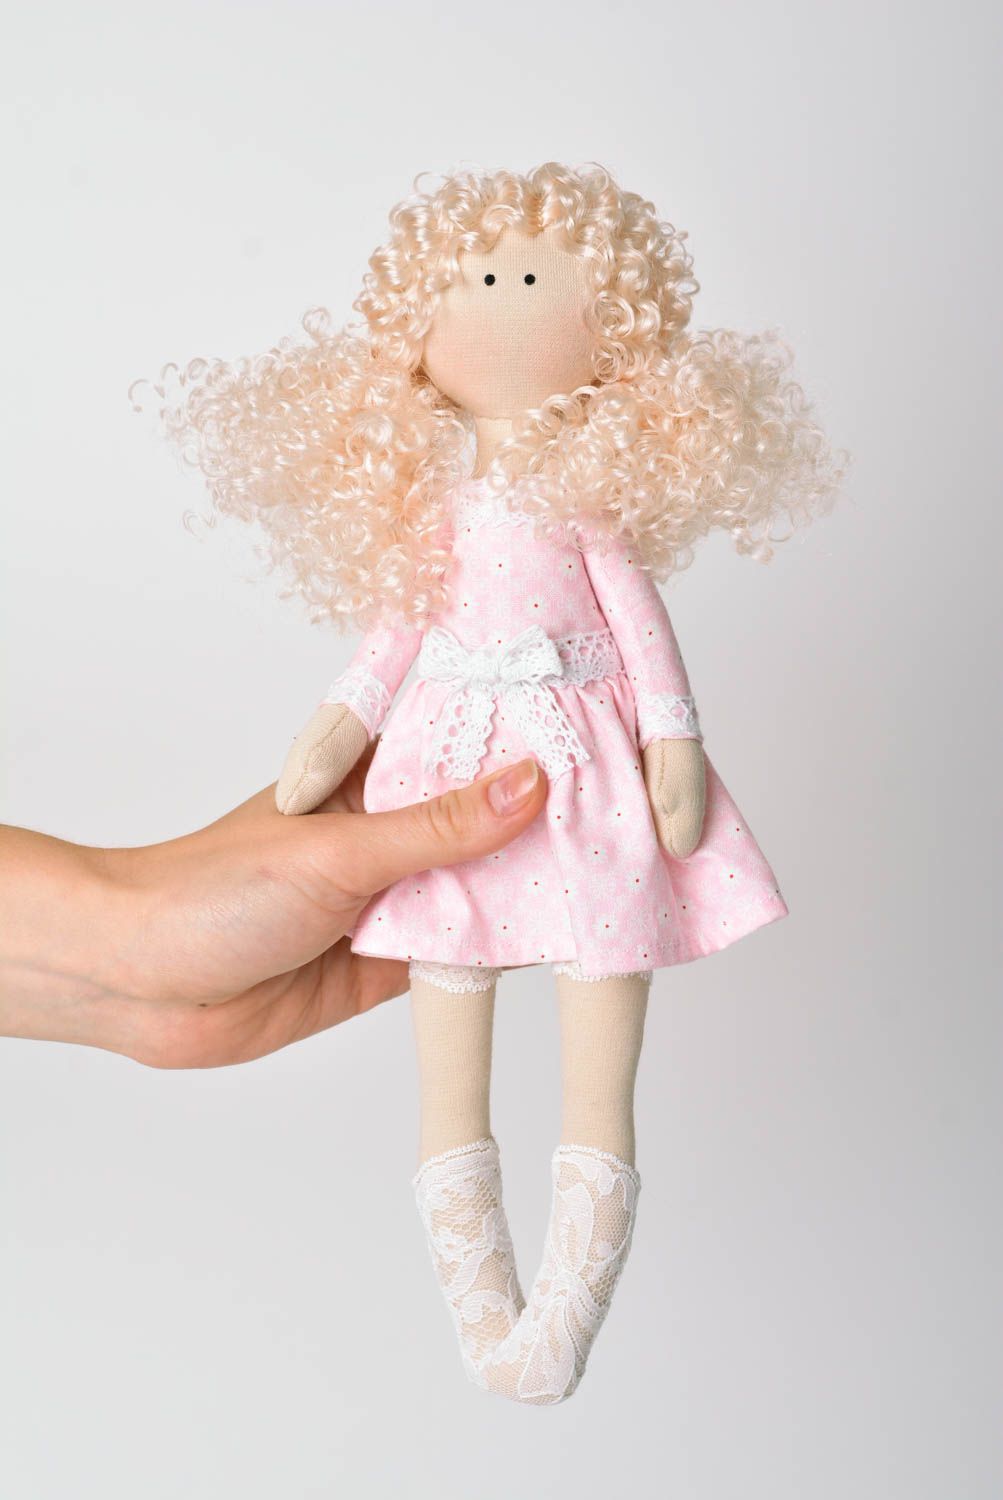 Handmade doll fabric doll designer rag doll interior decor gift ideas photo 2